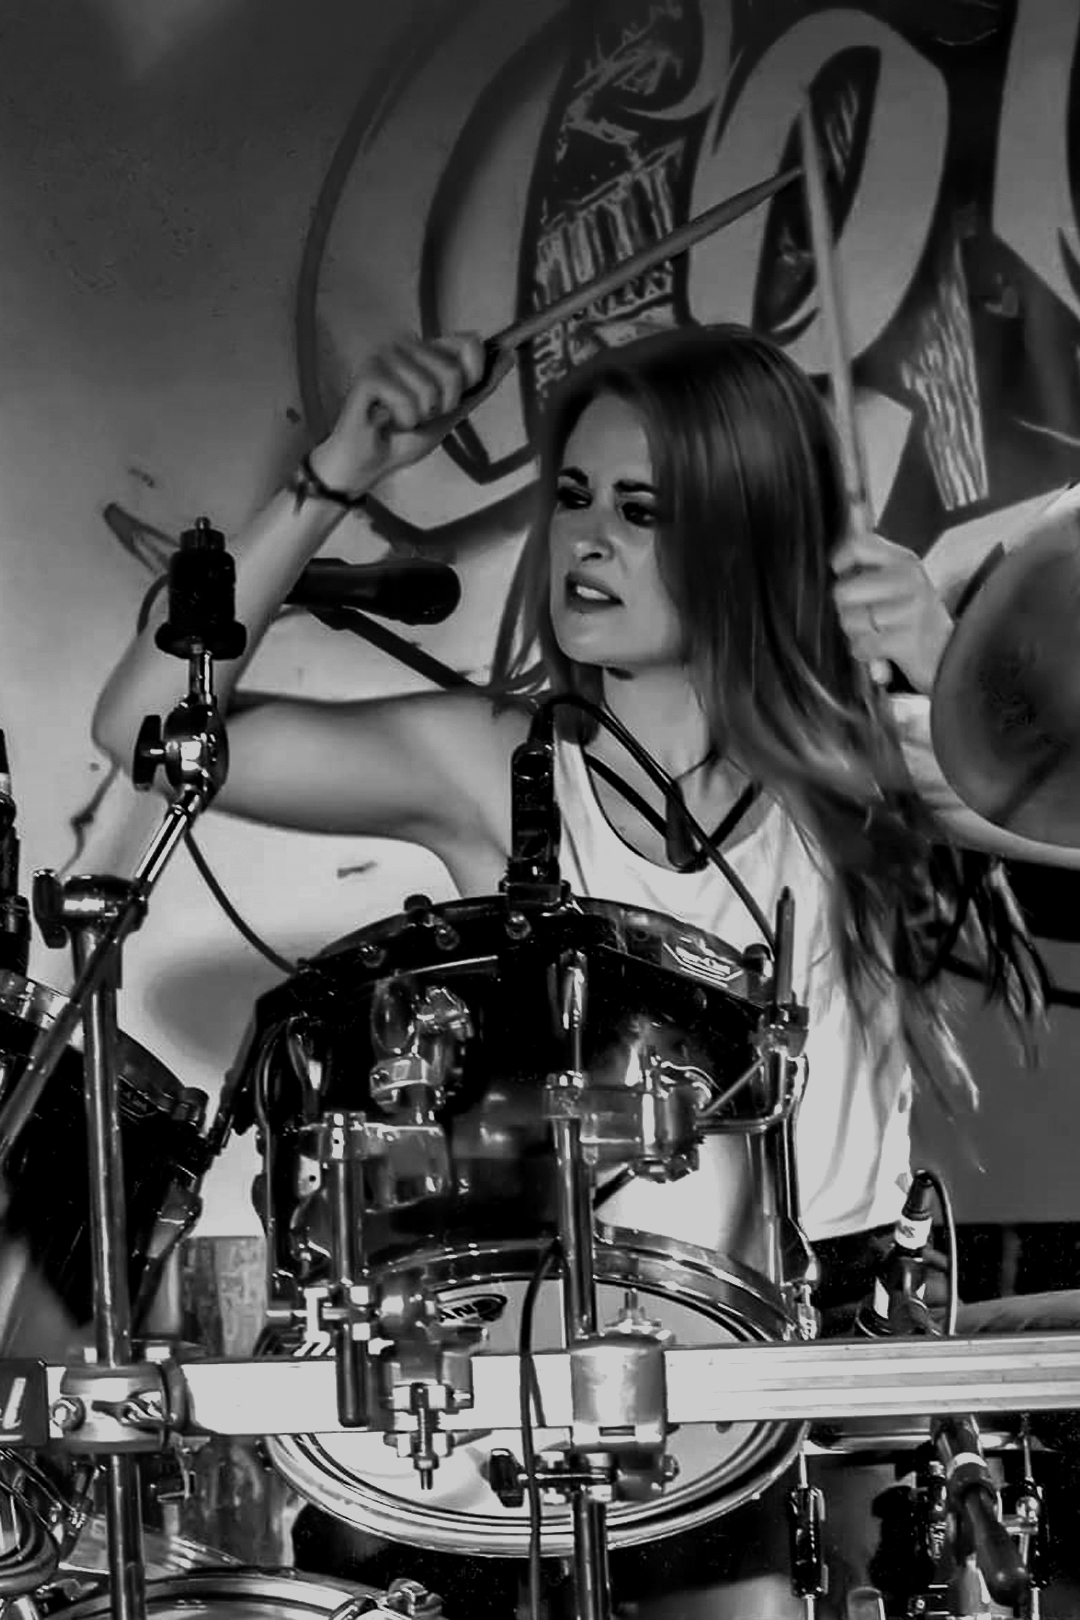 Emma drumming at The Venue, Westcliff on Sea